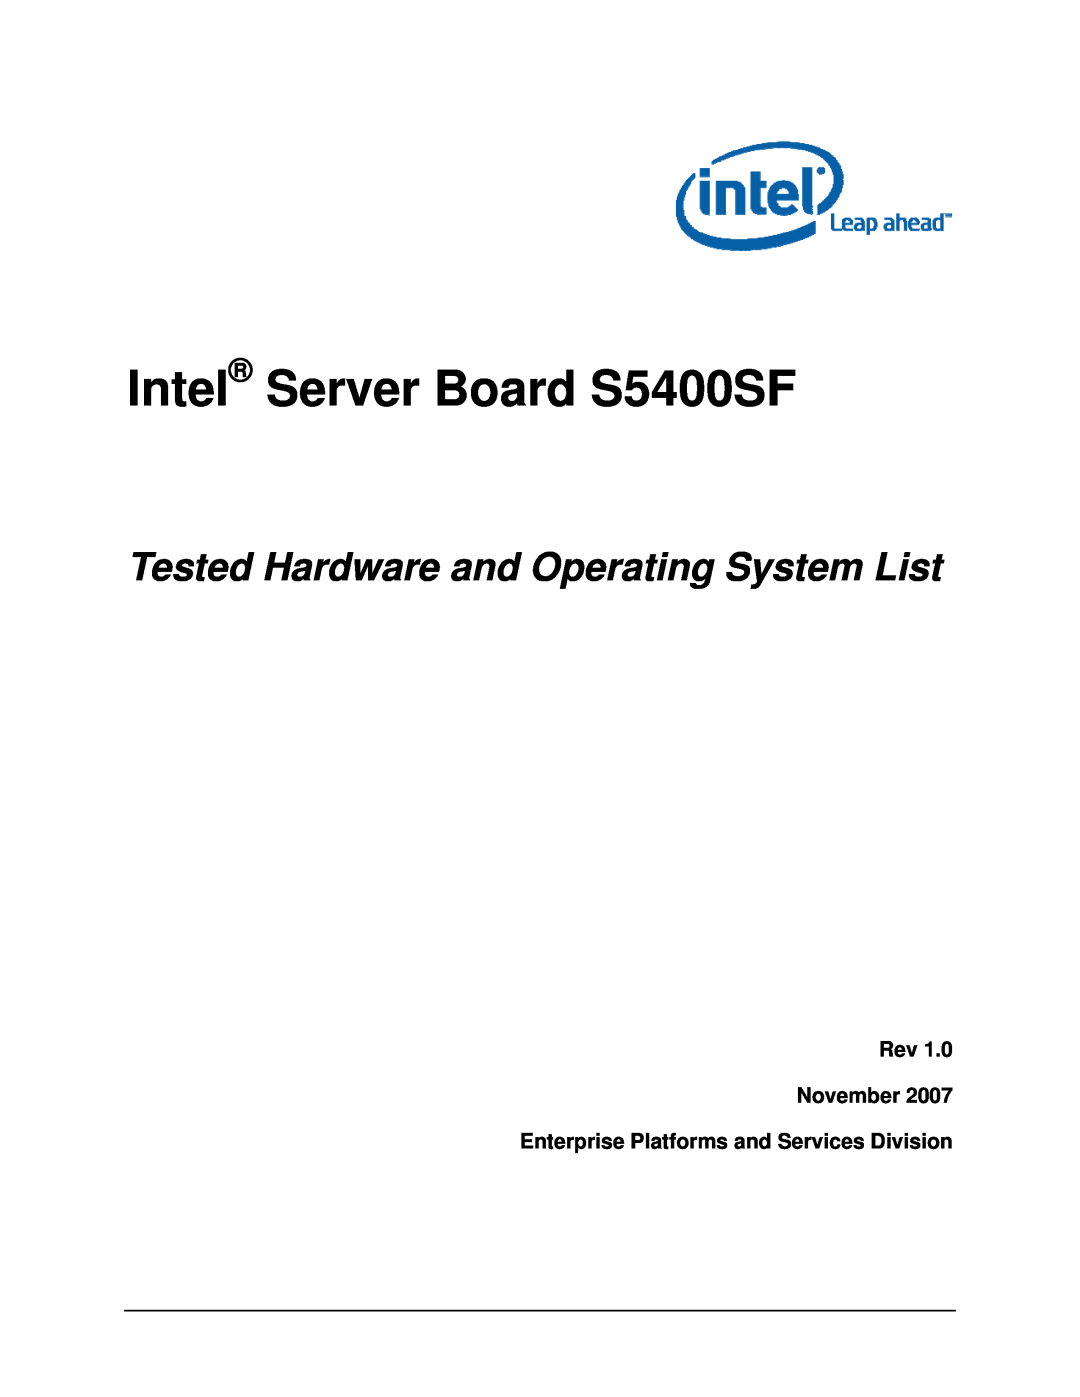 Intel manual Rev November, Enterprise Platforms and Services Division, Intel Server Board S5400SF 